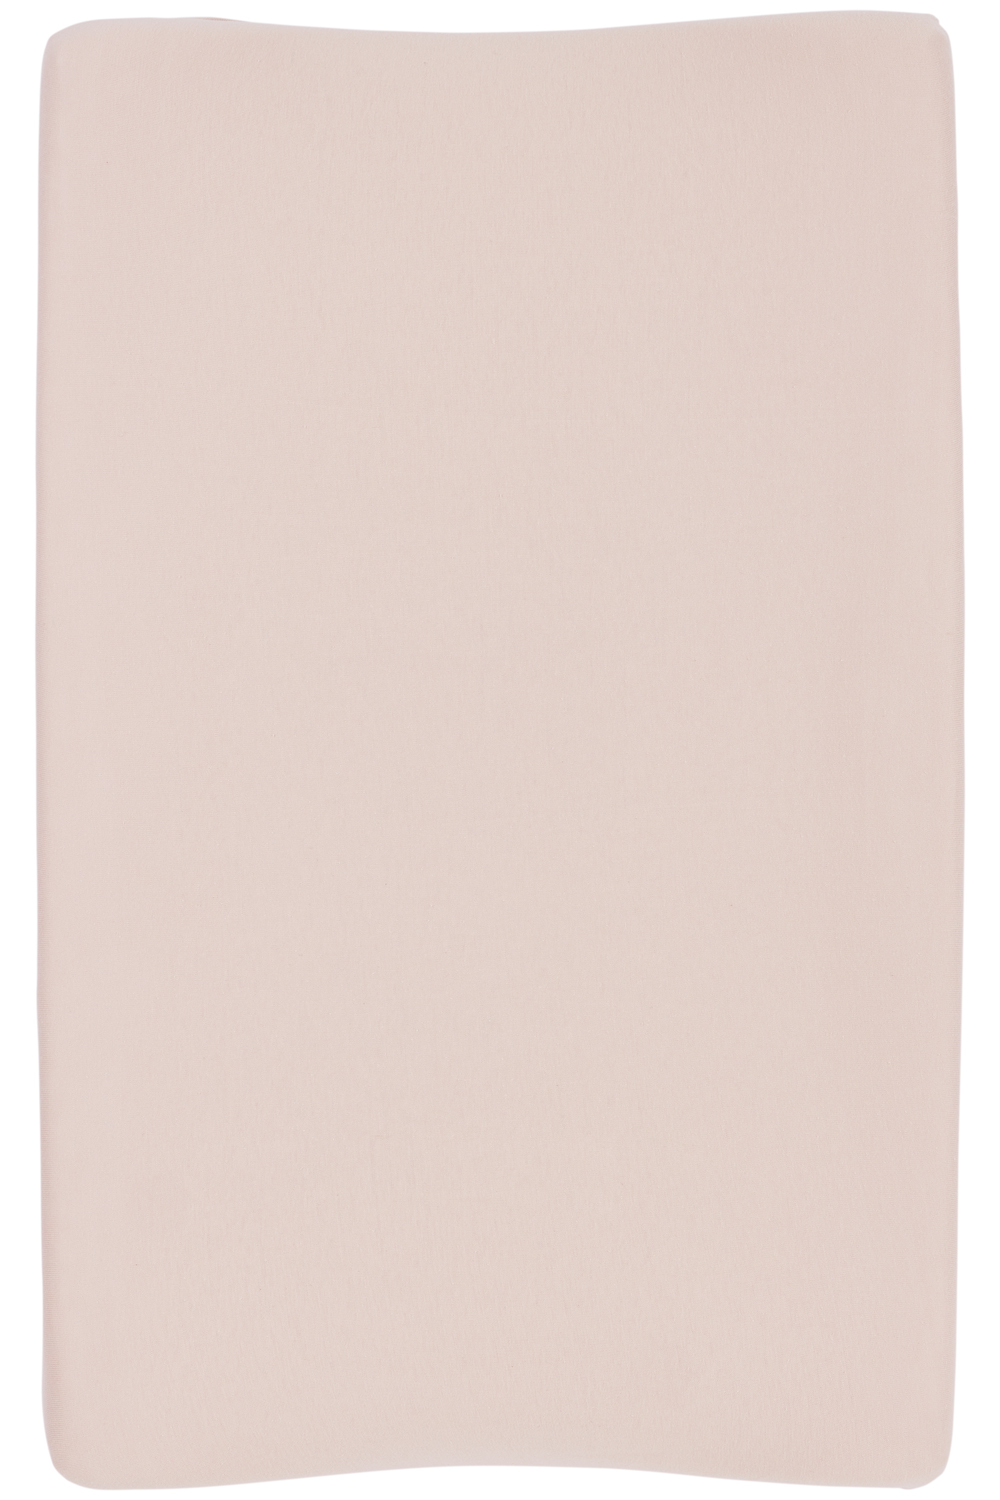 Wickelauflagenbezug 2er pack Uni - soft pink - 50x70cm